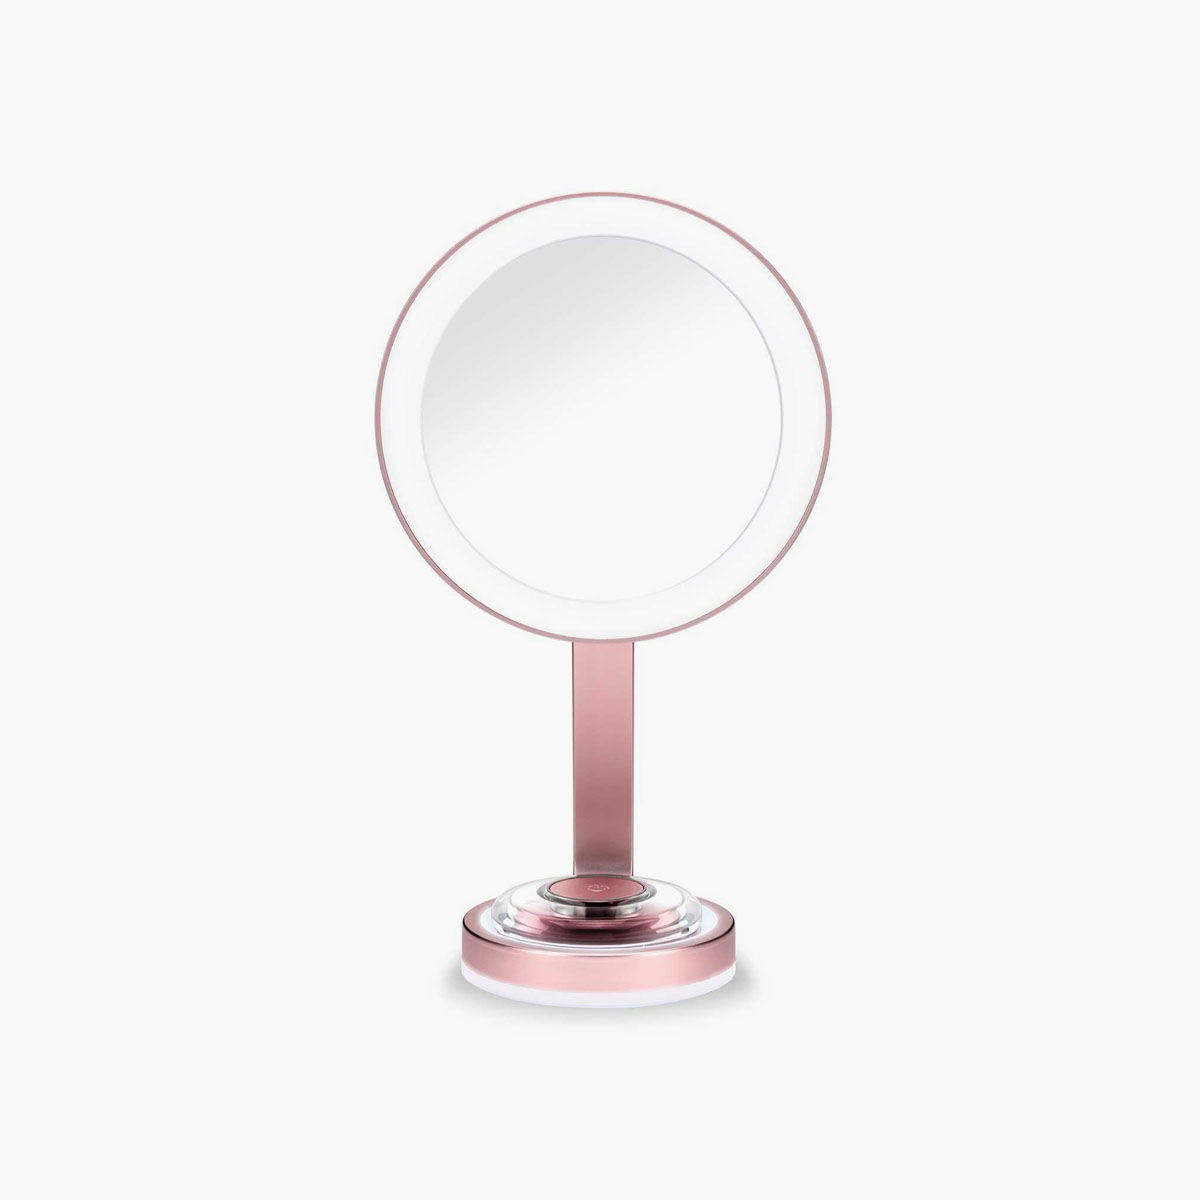 Led Beauty Mirror Kosmetikspiegel, 9450E